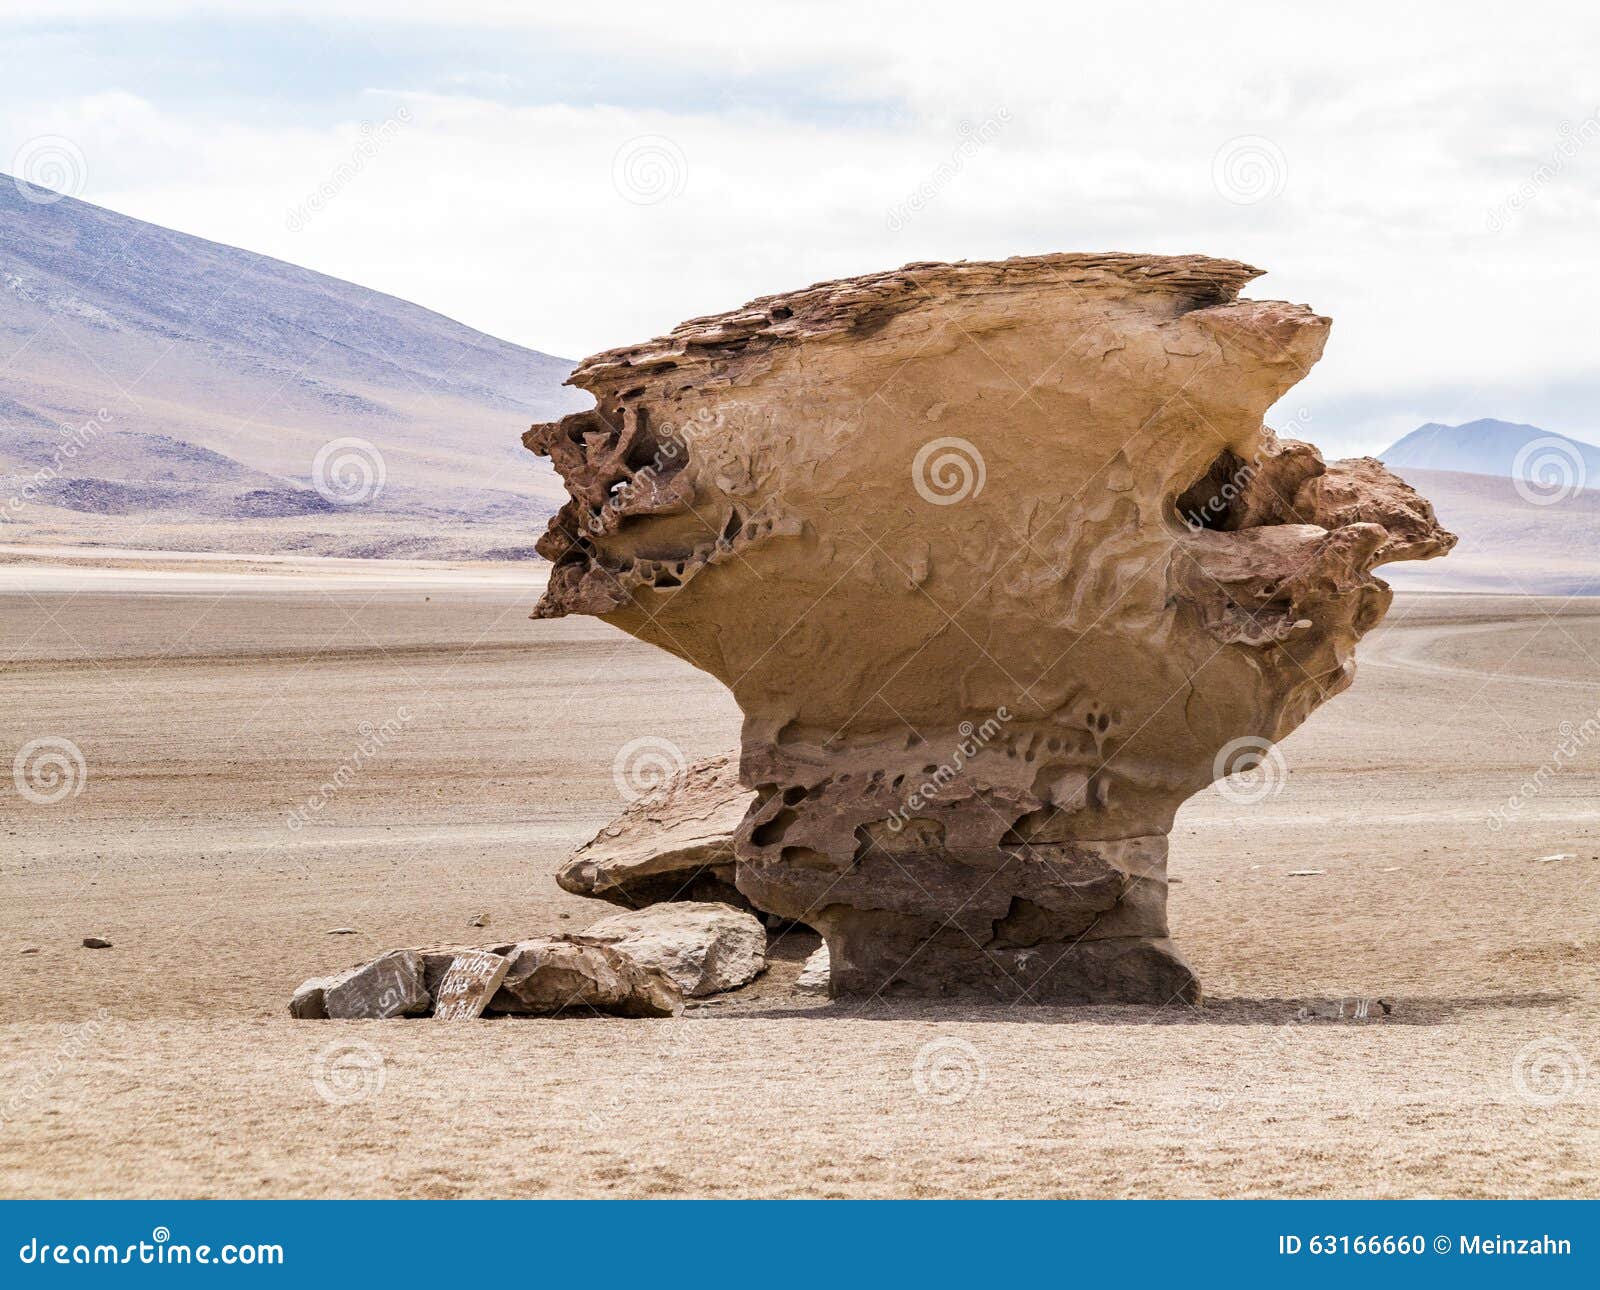 arbol de piedra (stone tree) is an  rock formation in bo